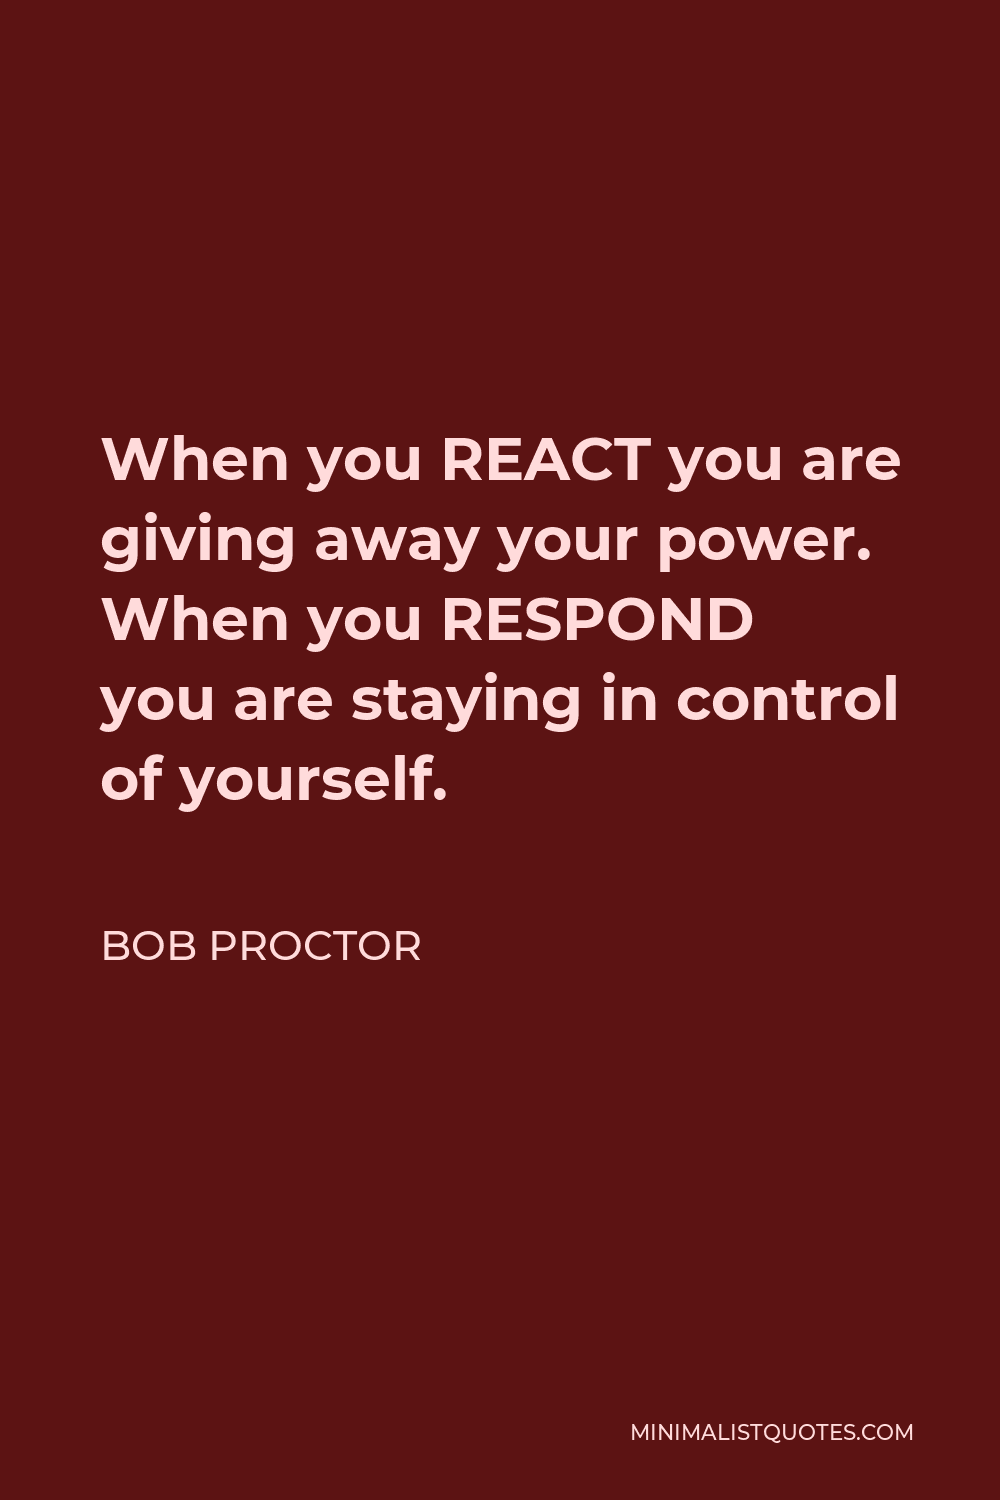 When you react, you're giving away your power.